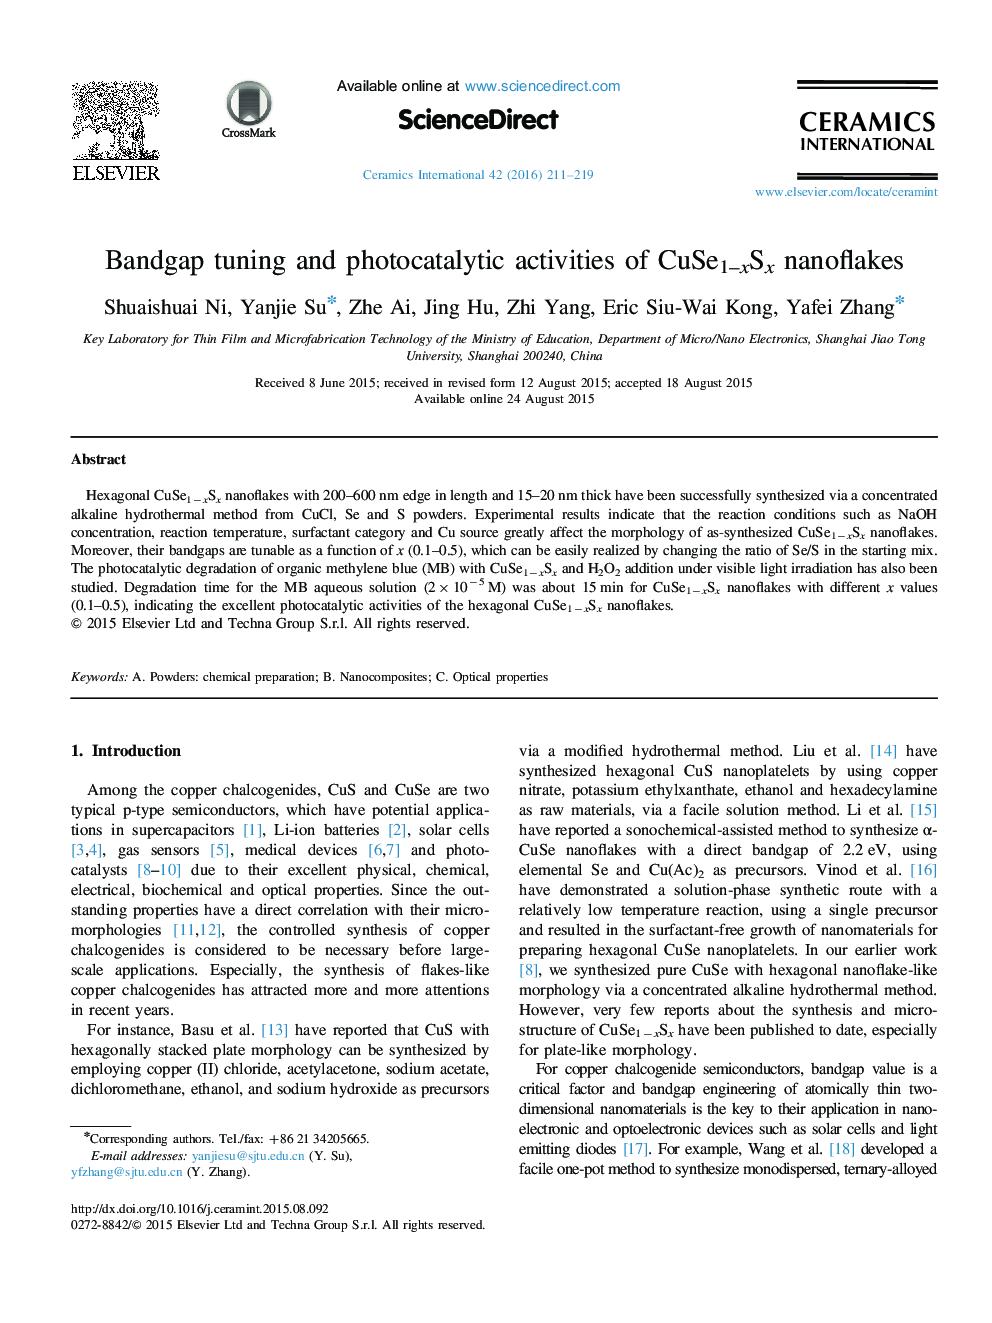 Bandgap tuning and photocatalytic activities of CuSe1–xSx nanoflakes